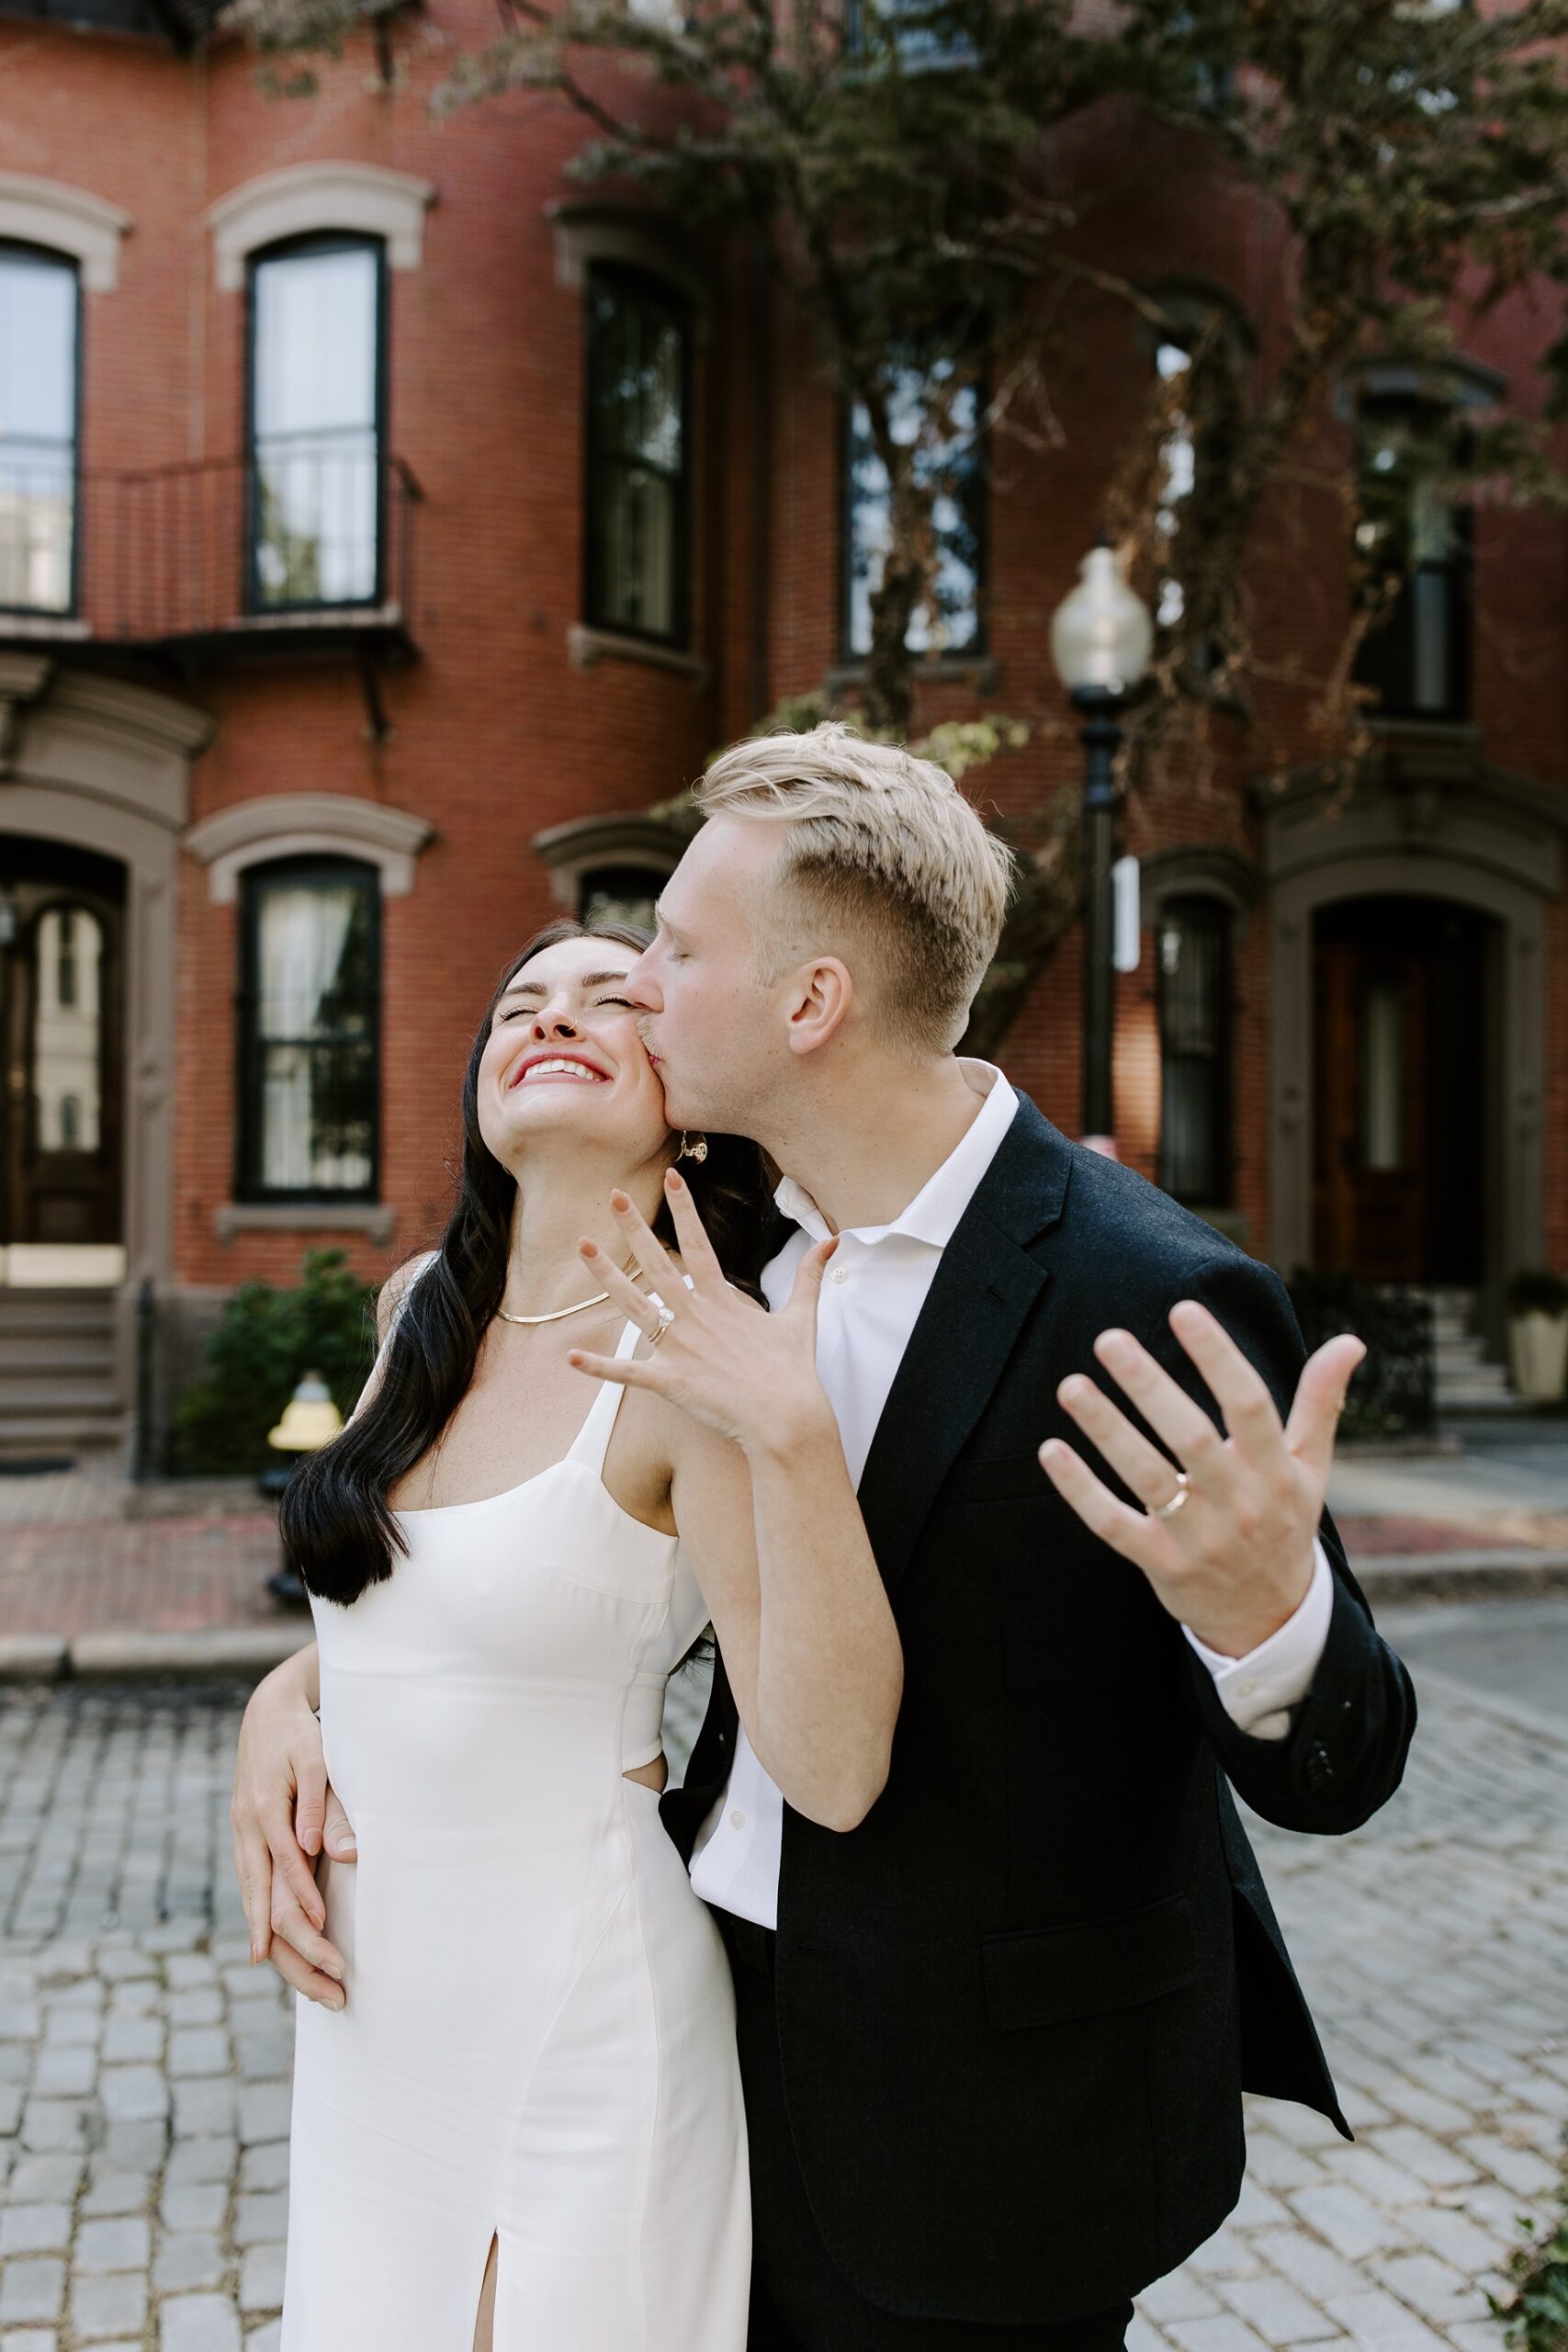 Groom kisses bride on cheek at Boston elopement